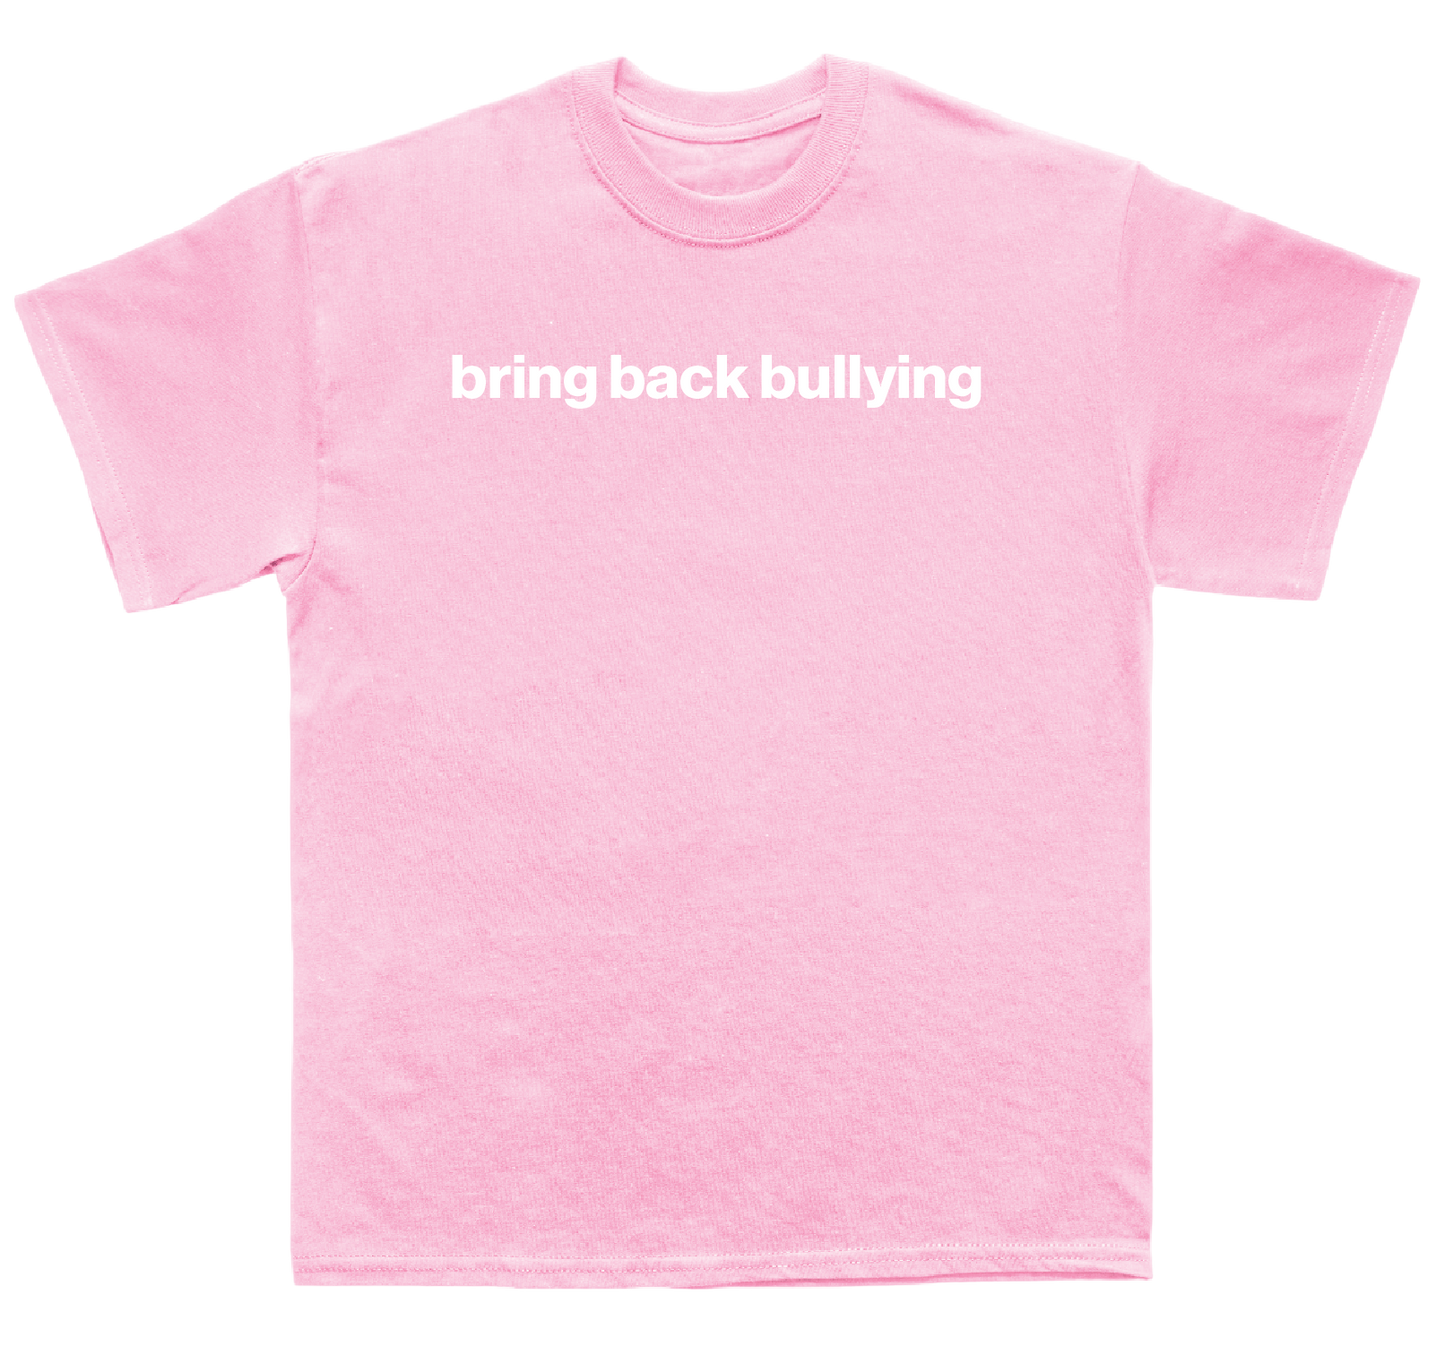 bring back bullying shirt